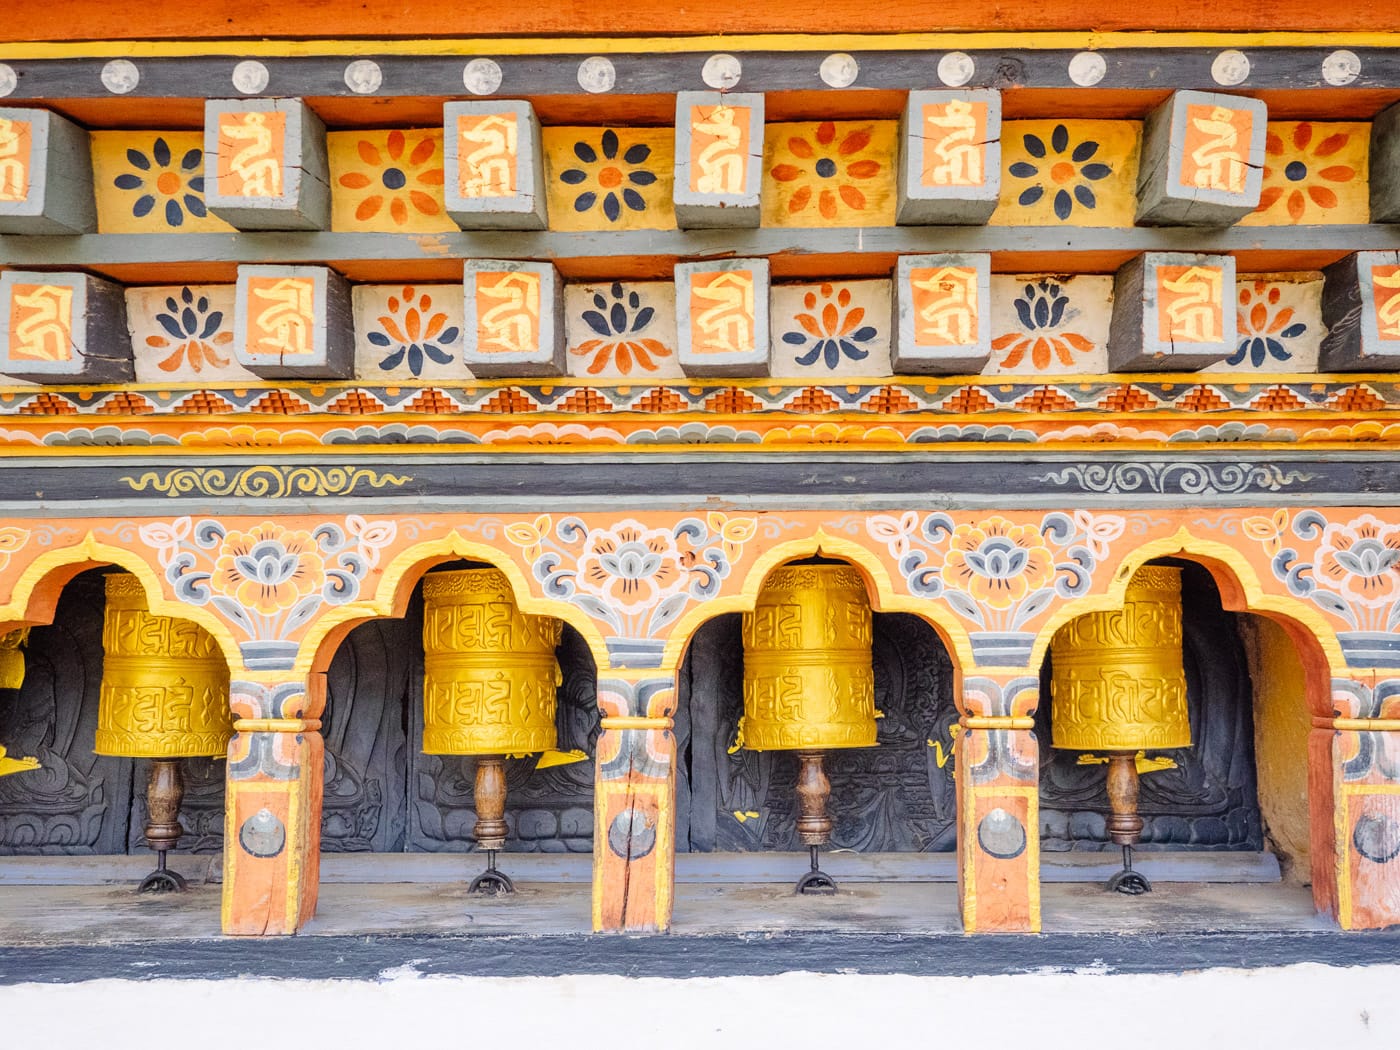 Chhimi Lhakhang Temple prayer wheel